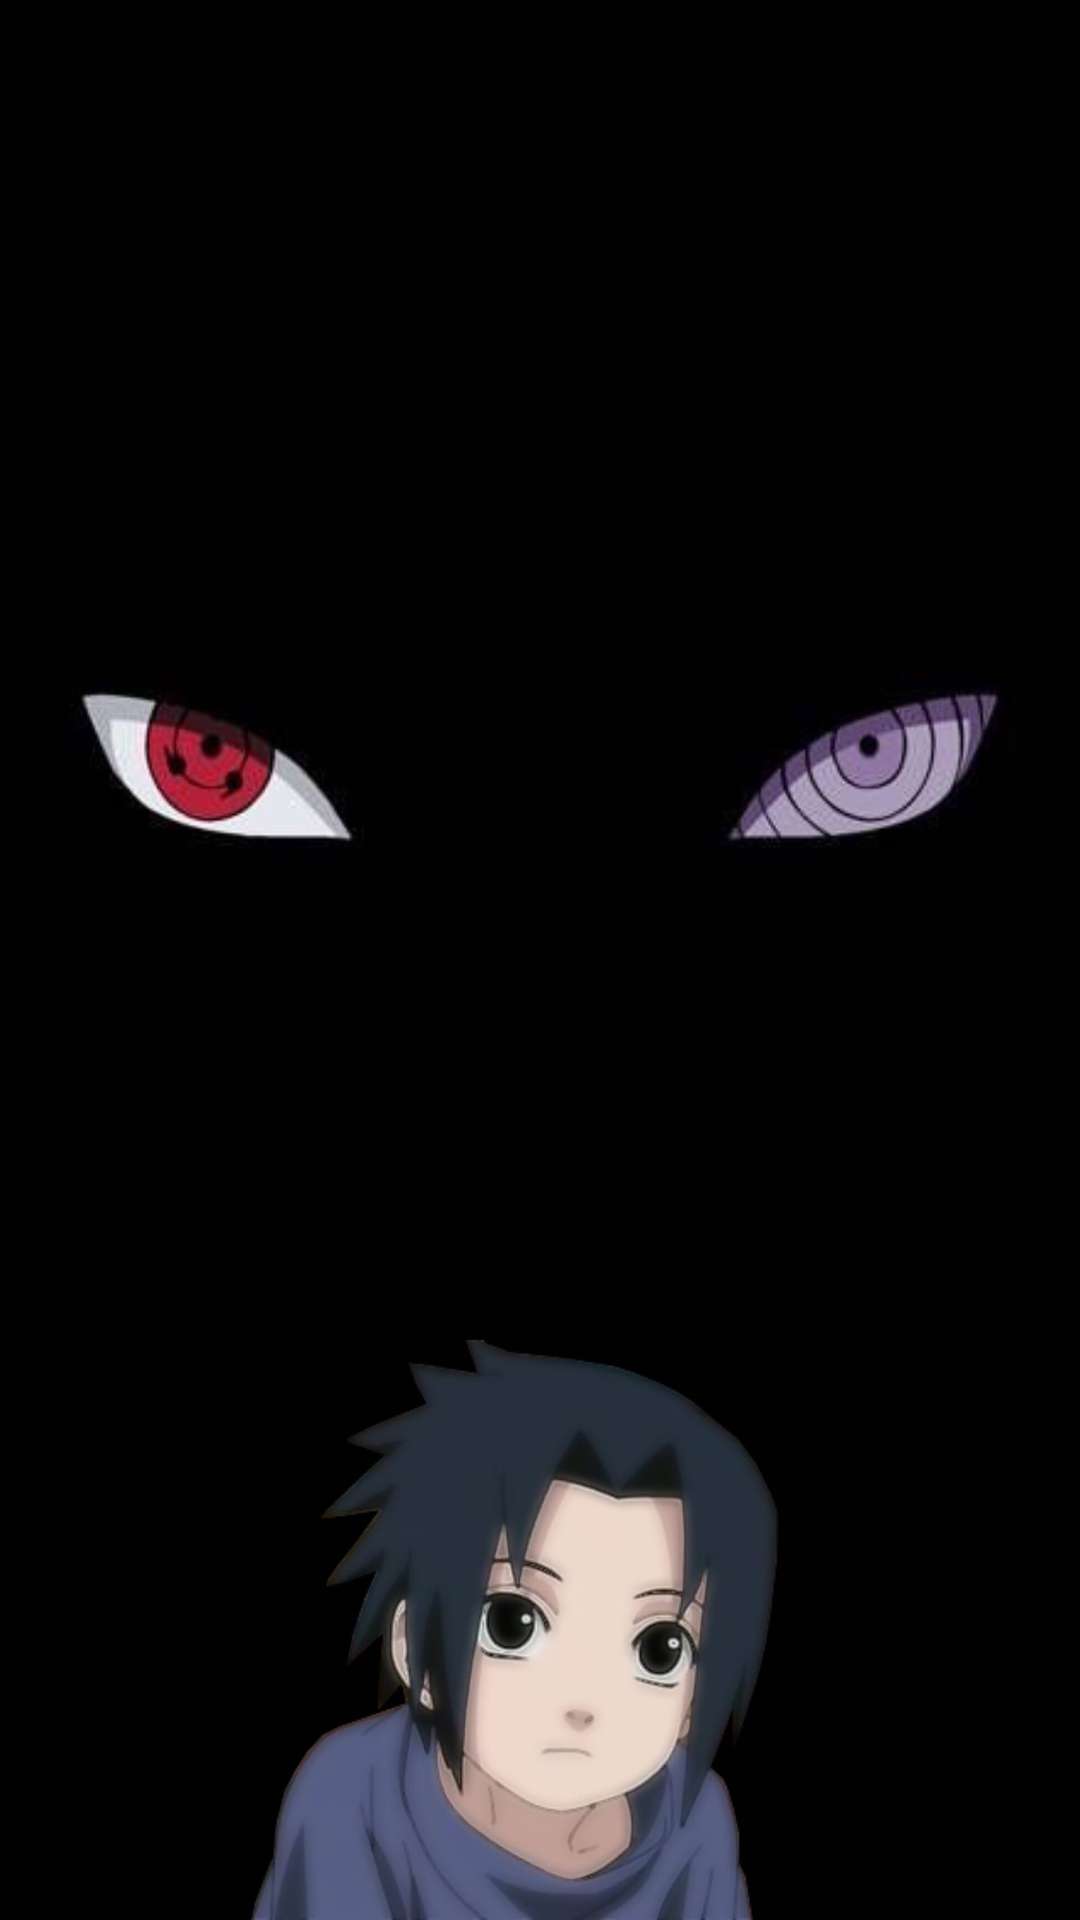 Wallpaper ID 399840  Anime Naruto Phone Wallpaper Sasuke Uchiha  1080x1920 free download